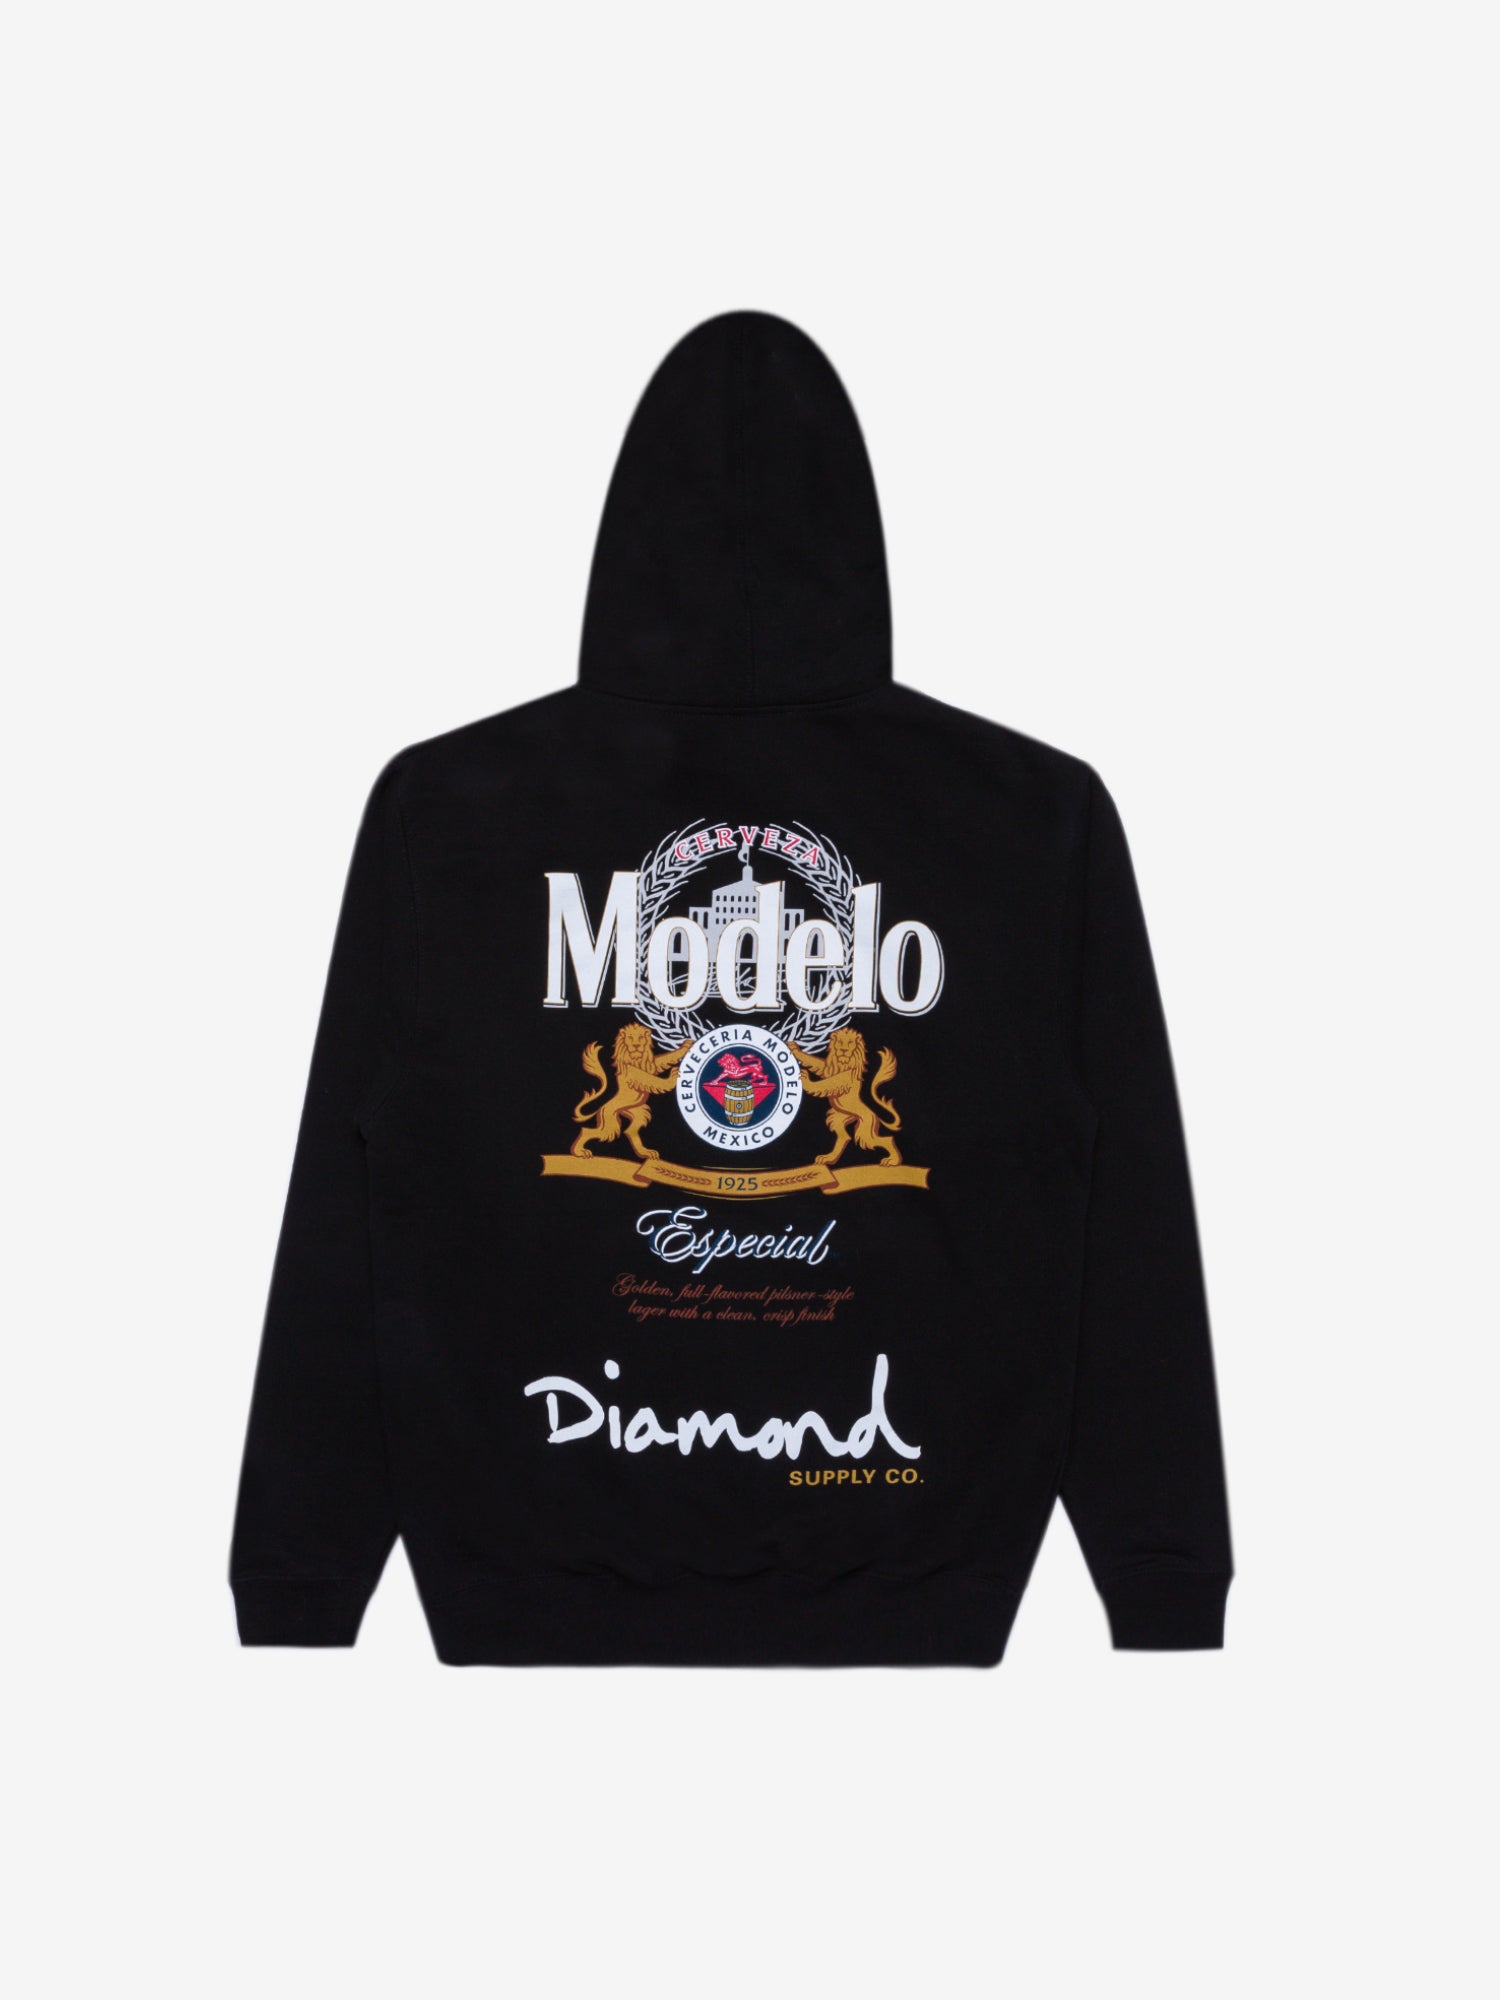 diamond and supply co hoodies